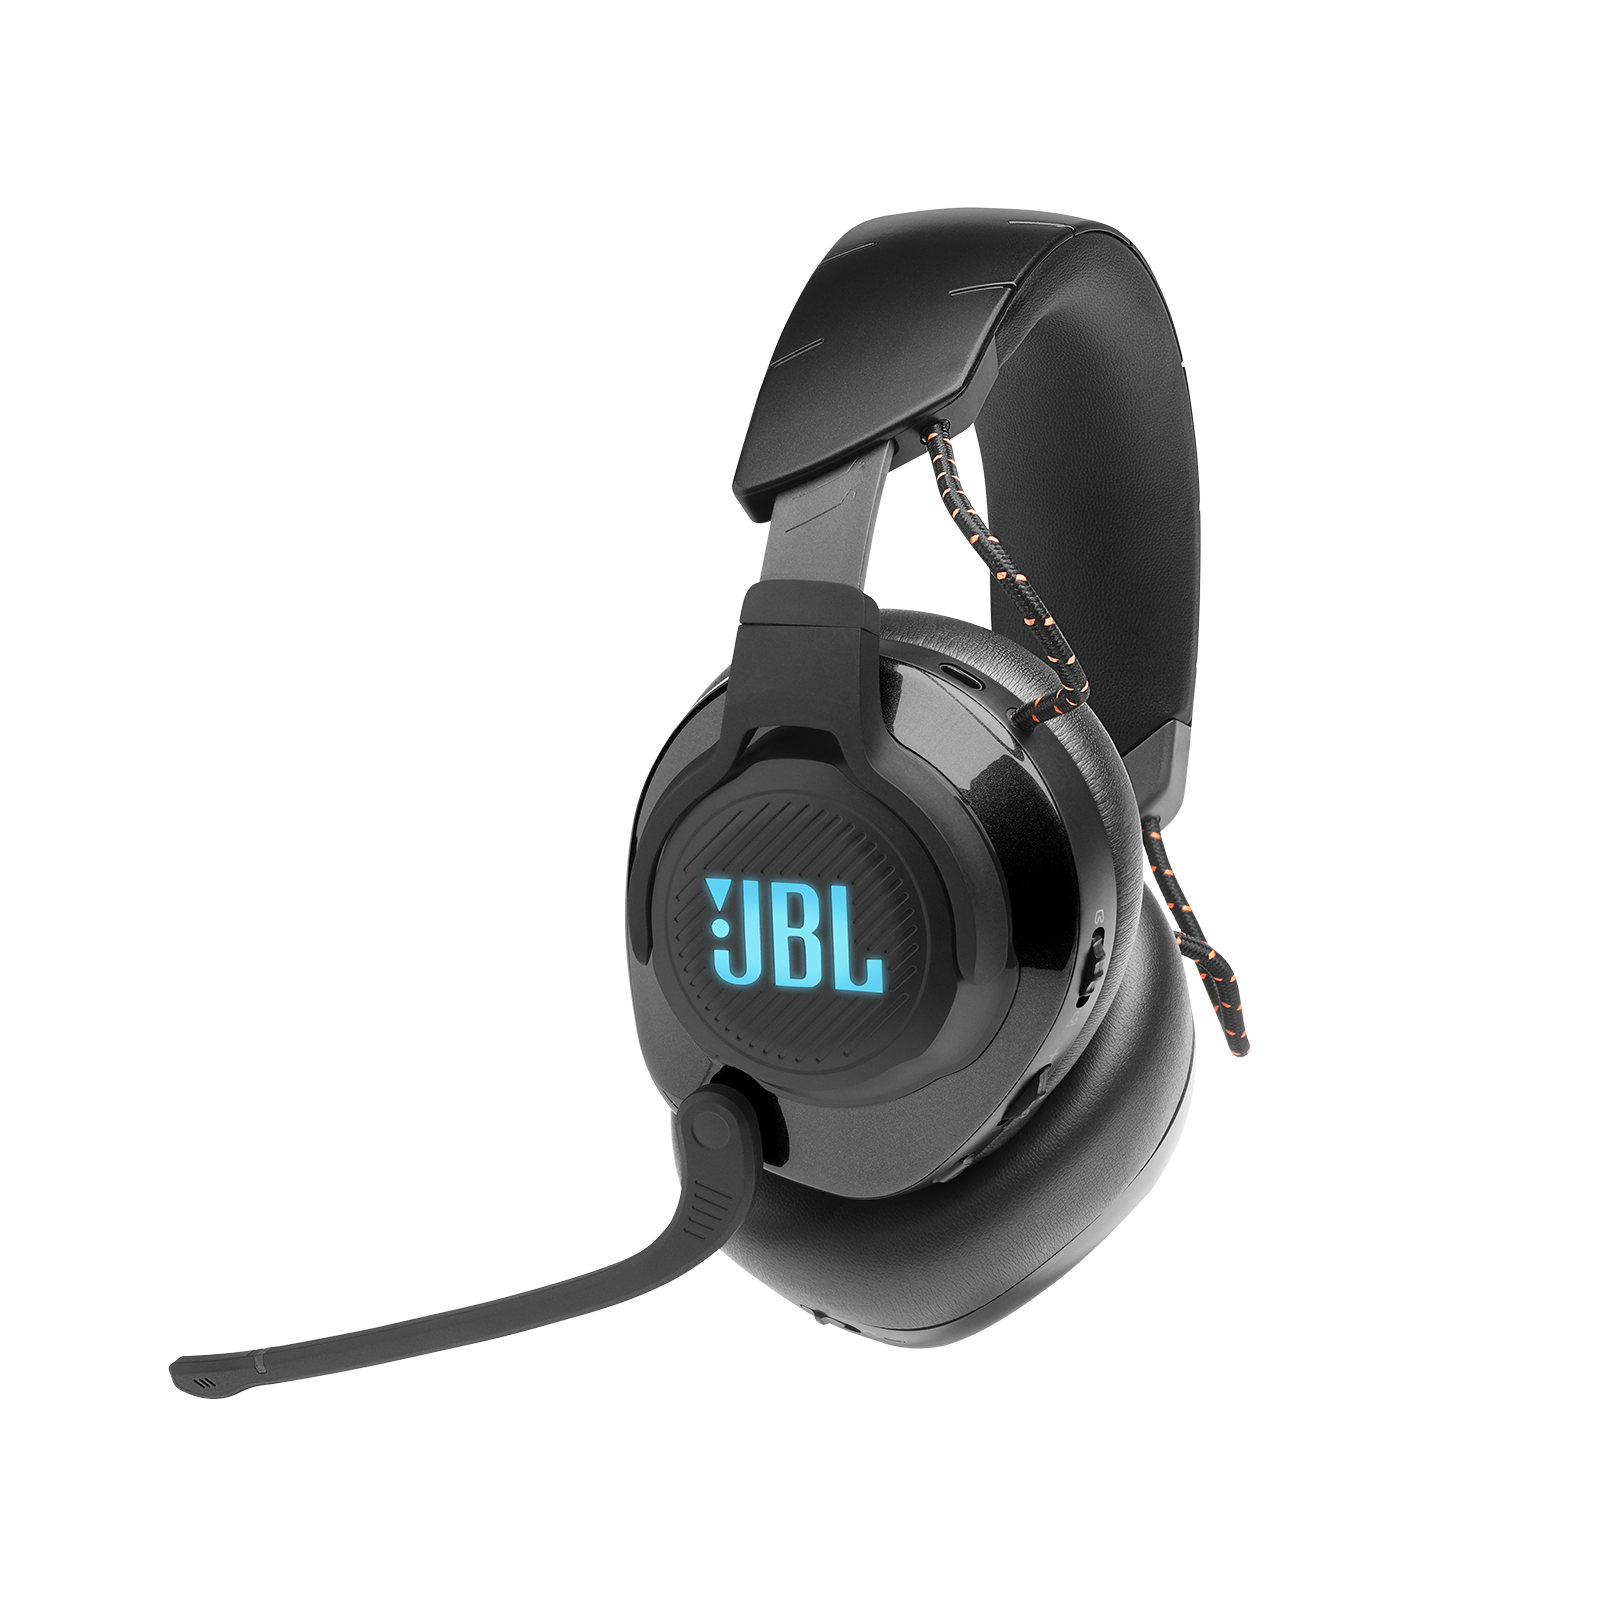 JBL Quantum 610 Wireless - Black - Wireless over-ear gaming headset - Detailshot 1